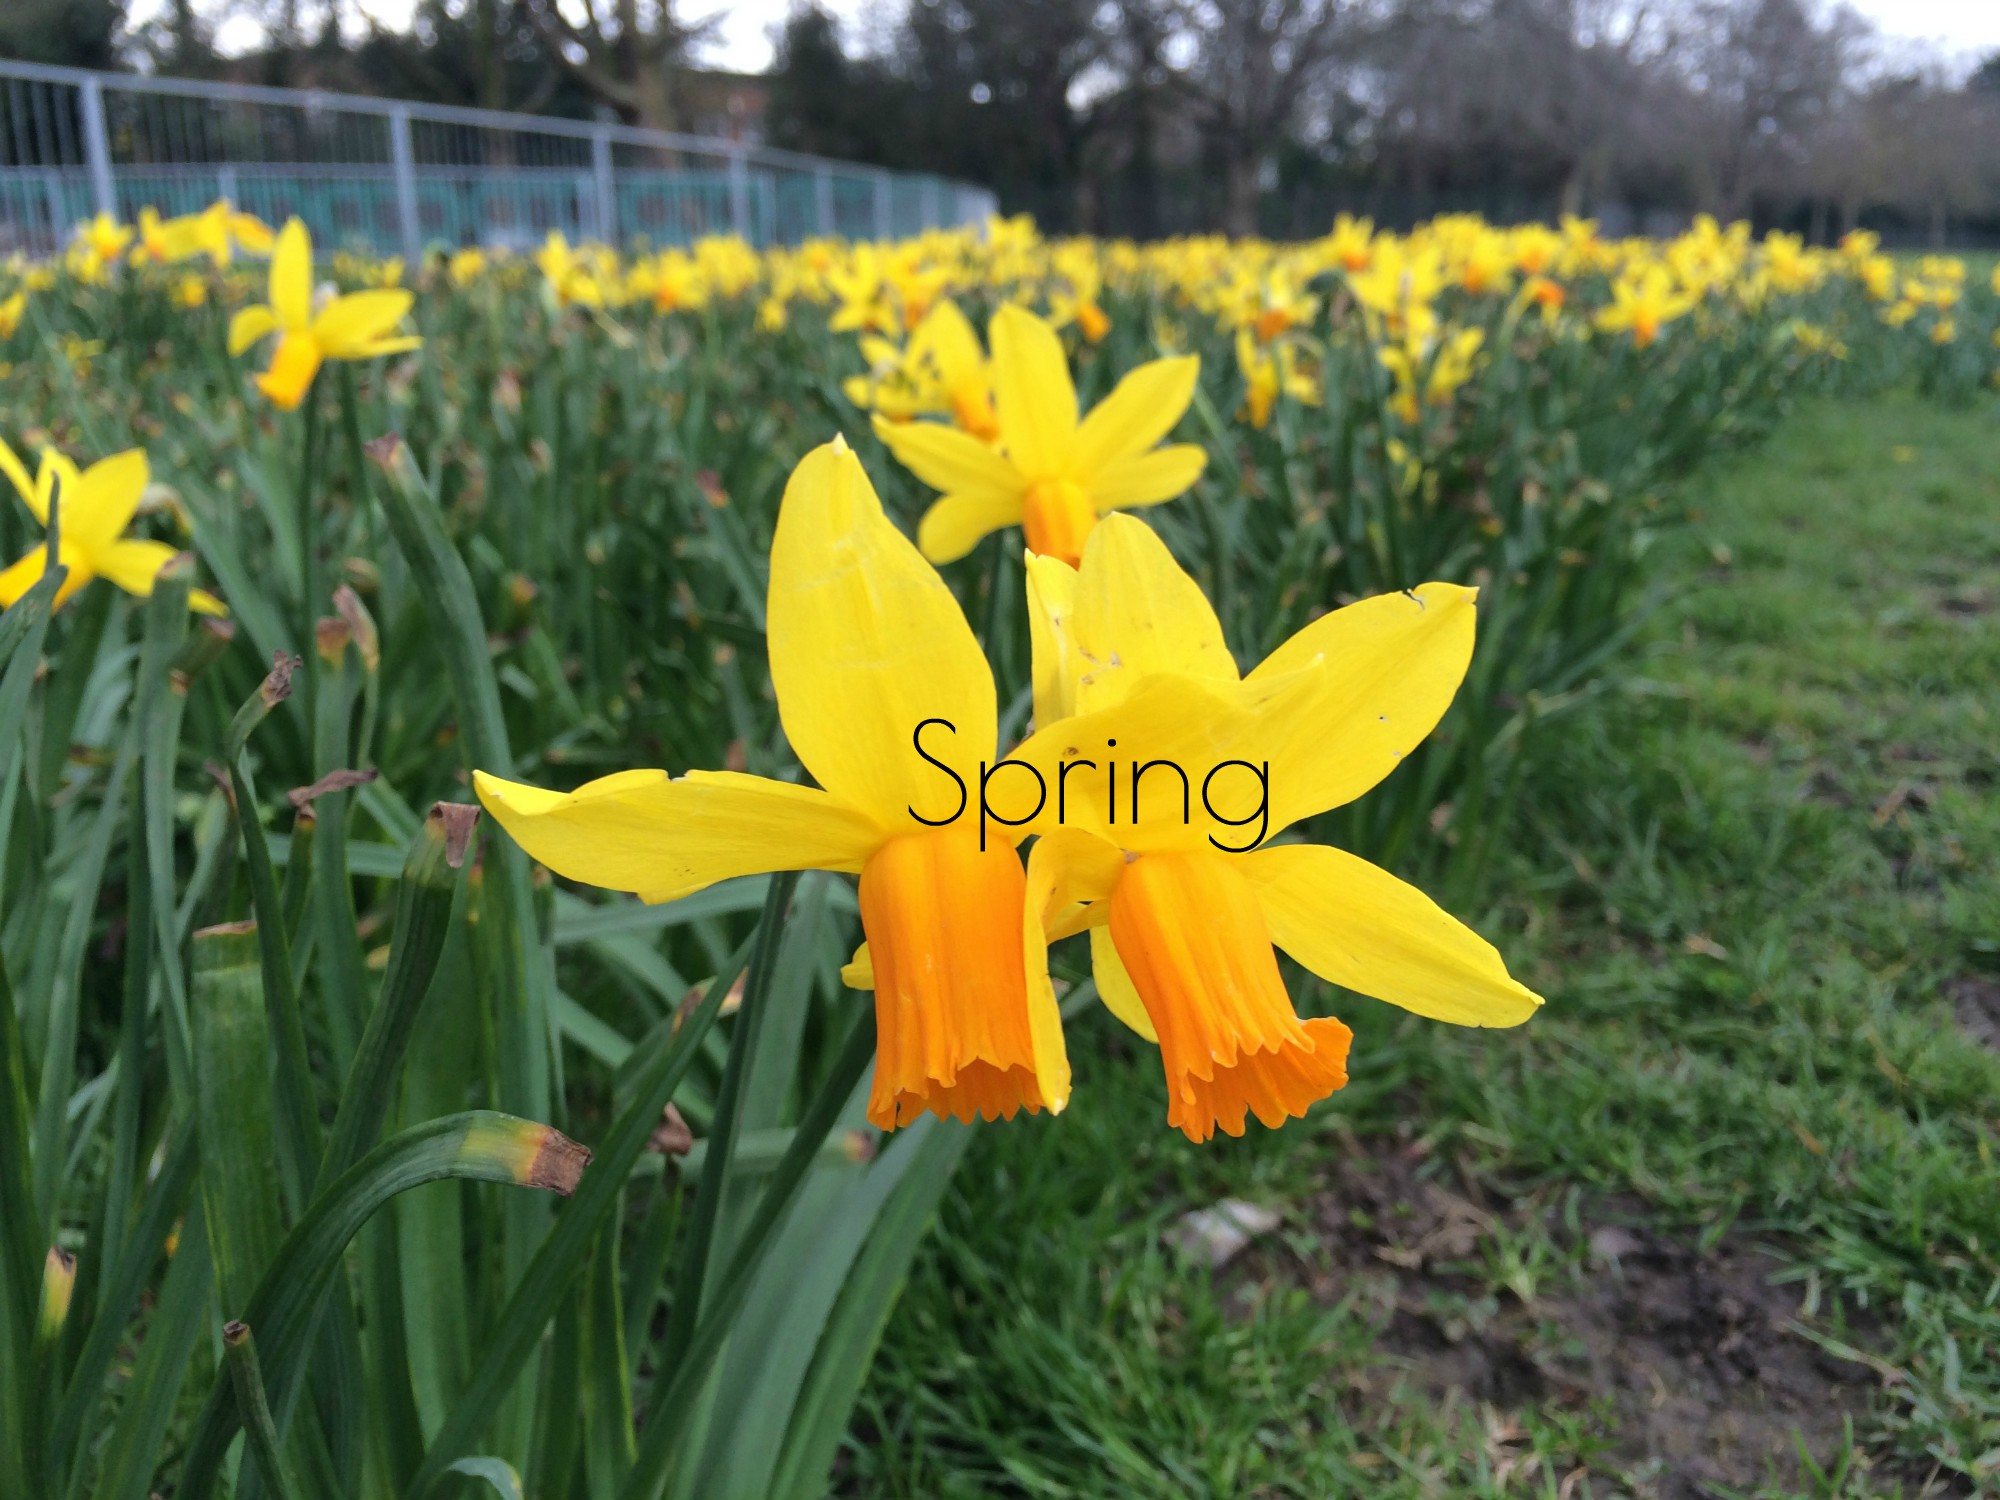 Spring: A Retrospective